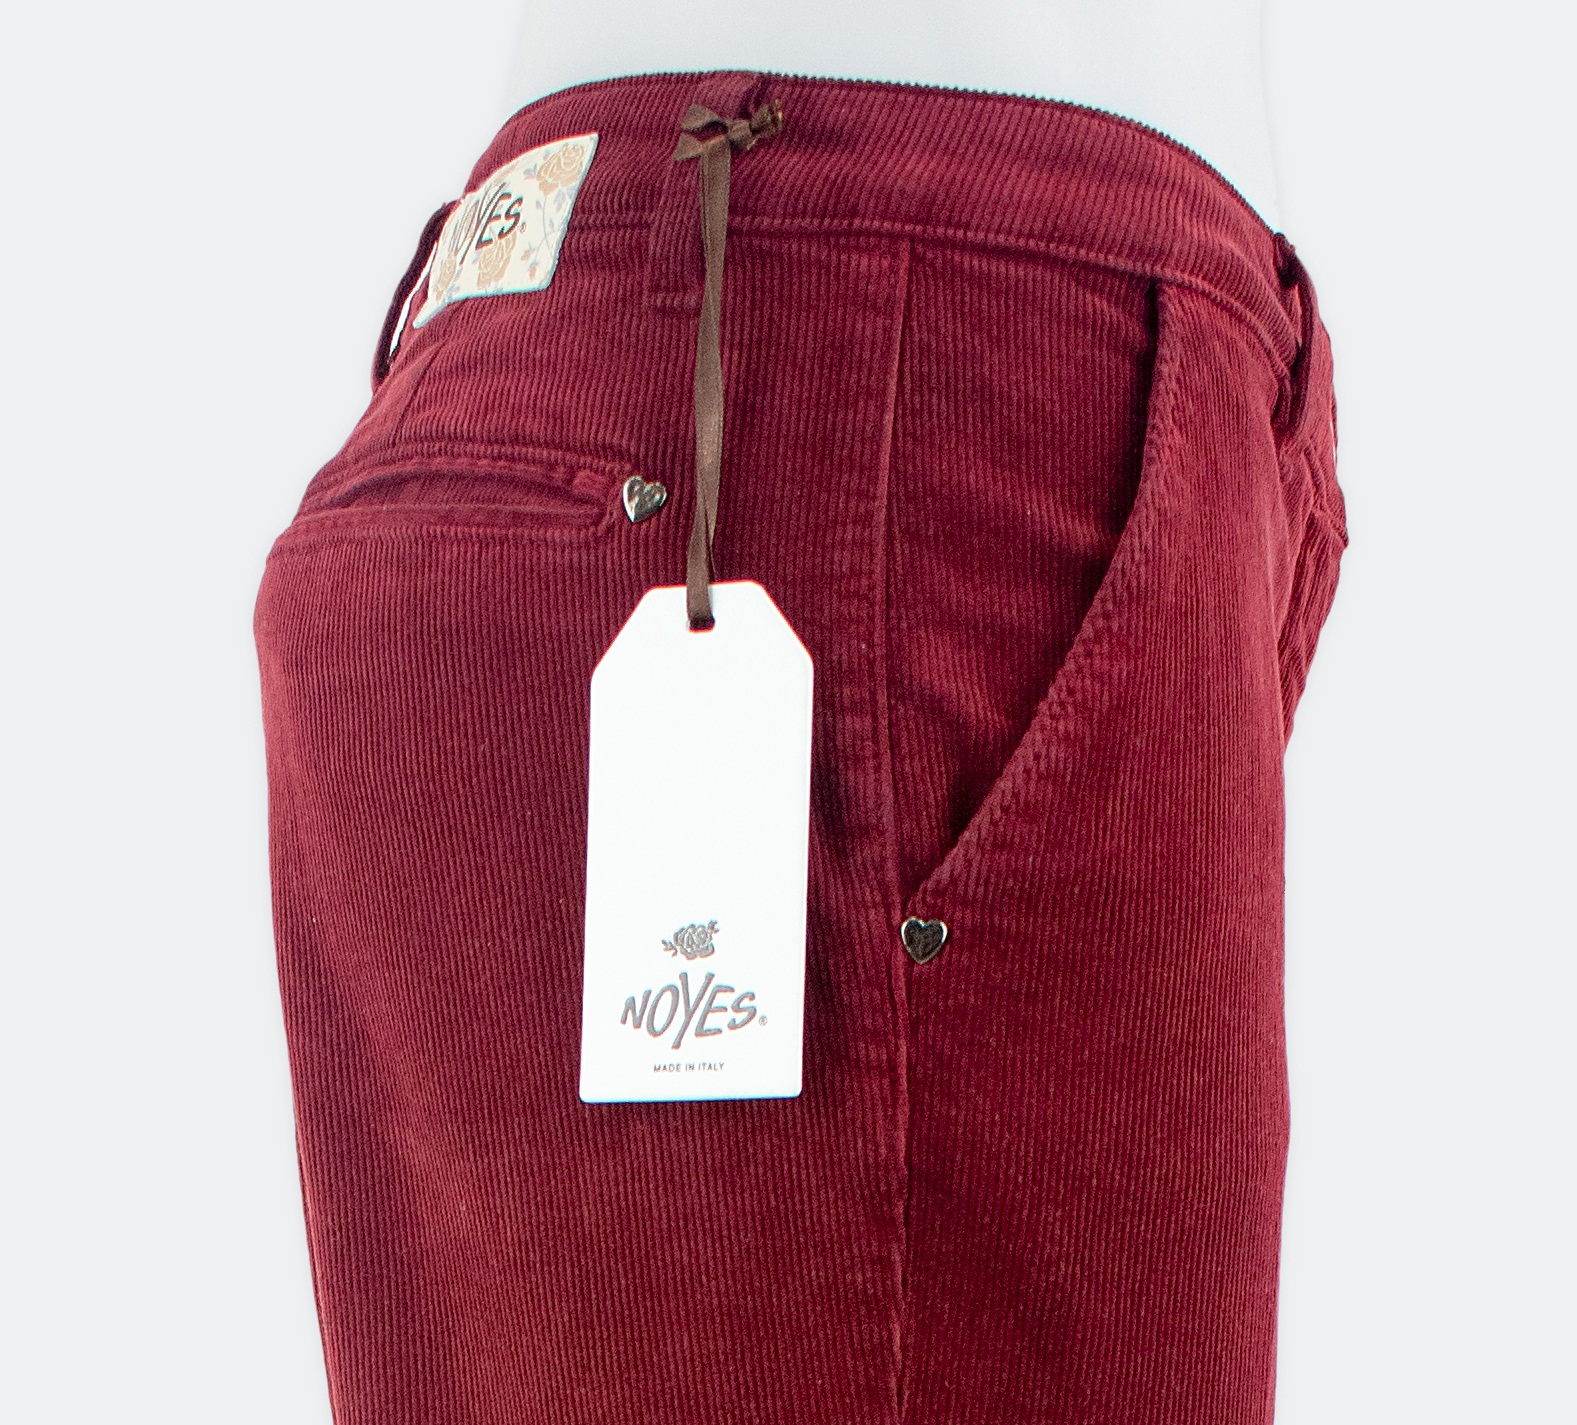 Pantalone chinos in velluto 500/righe elastico